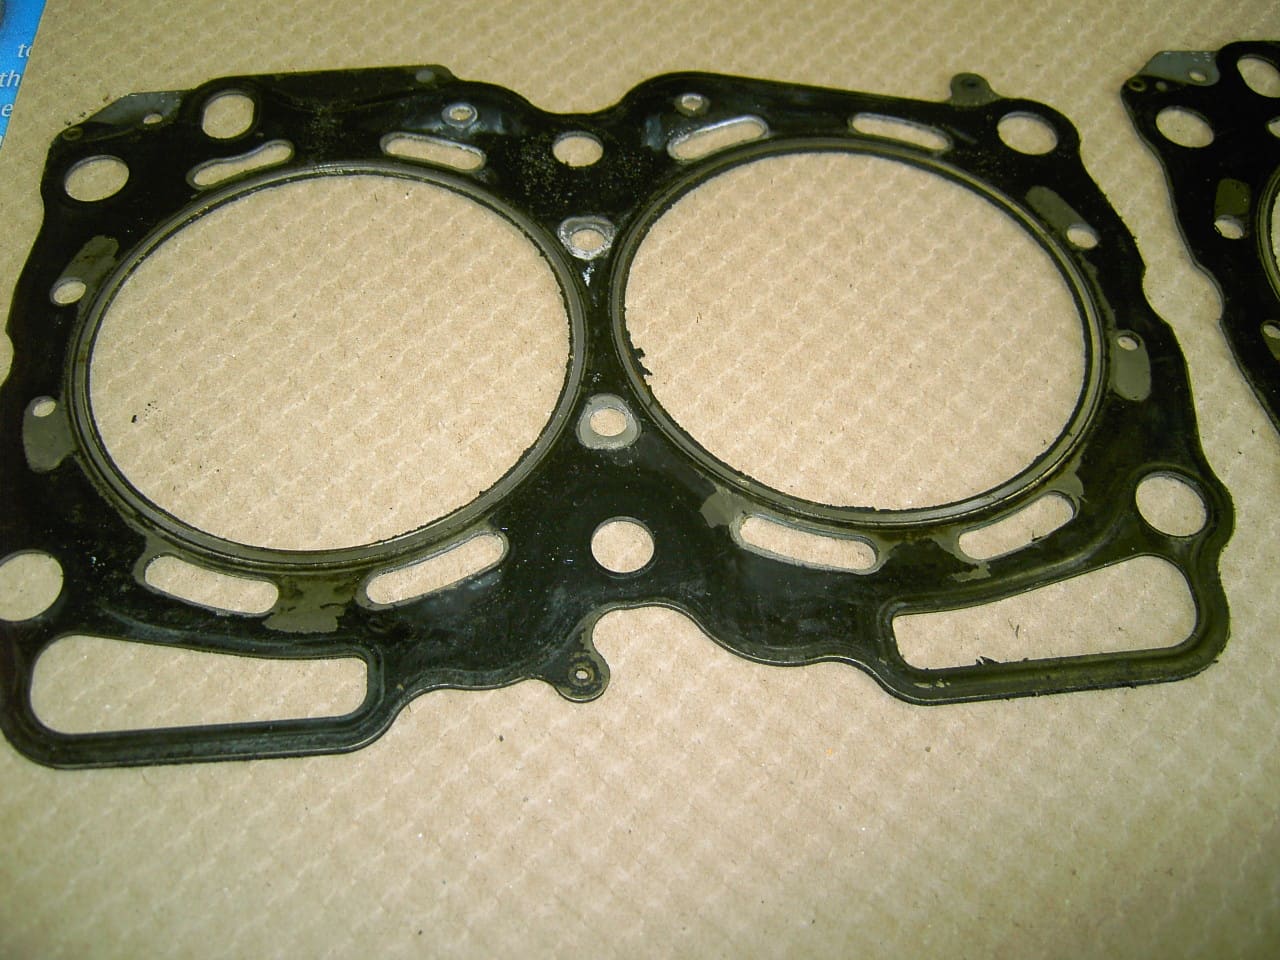 Subaru head gasket